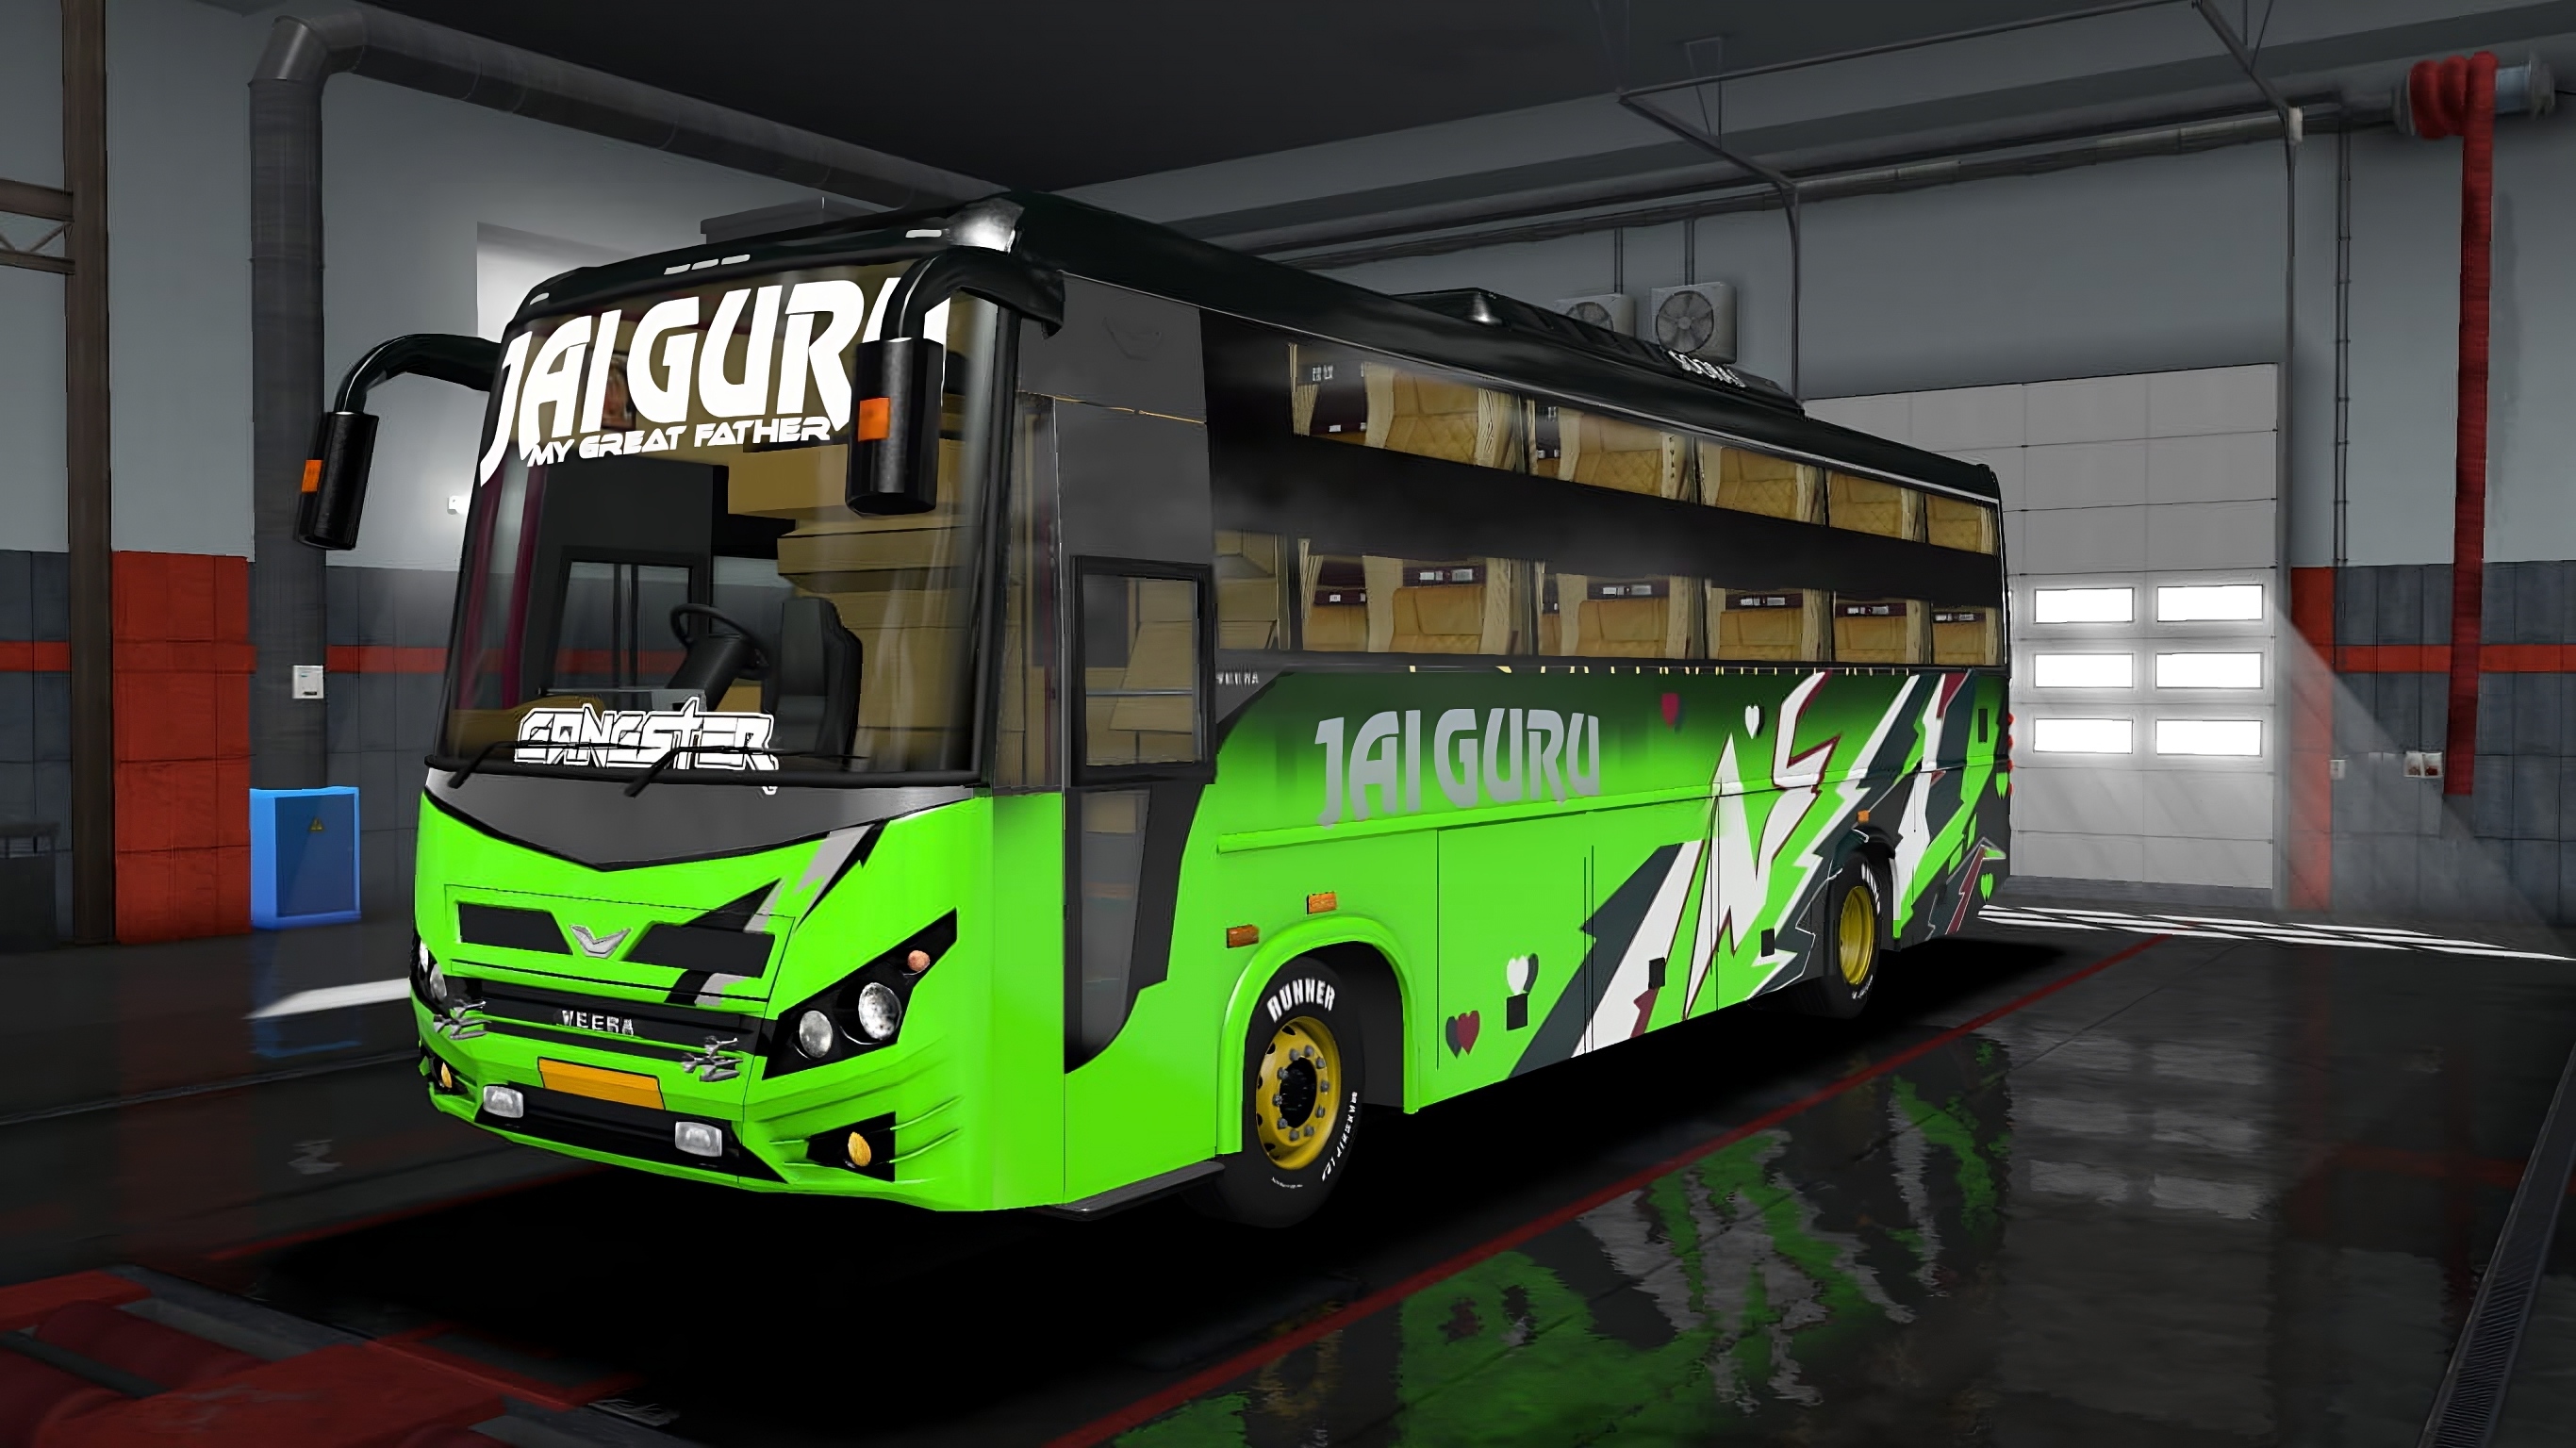 Tourist Bus - jai guru